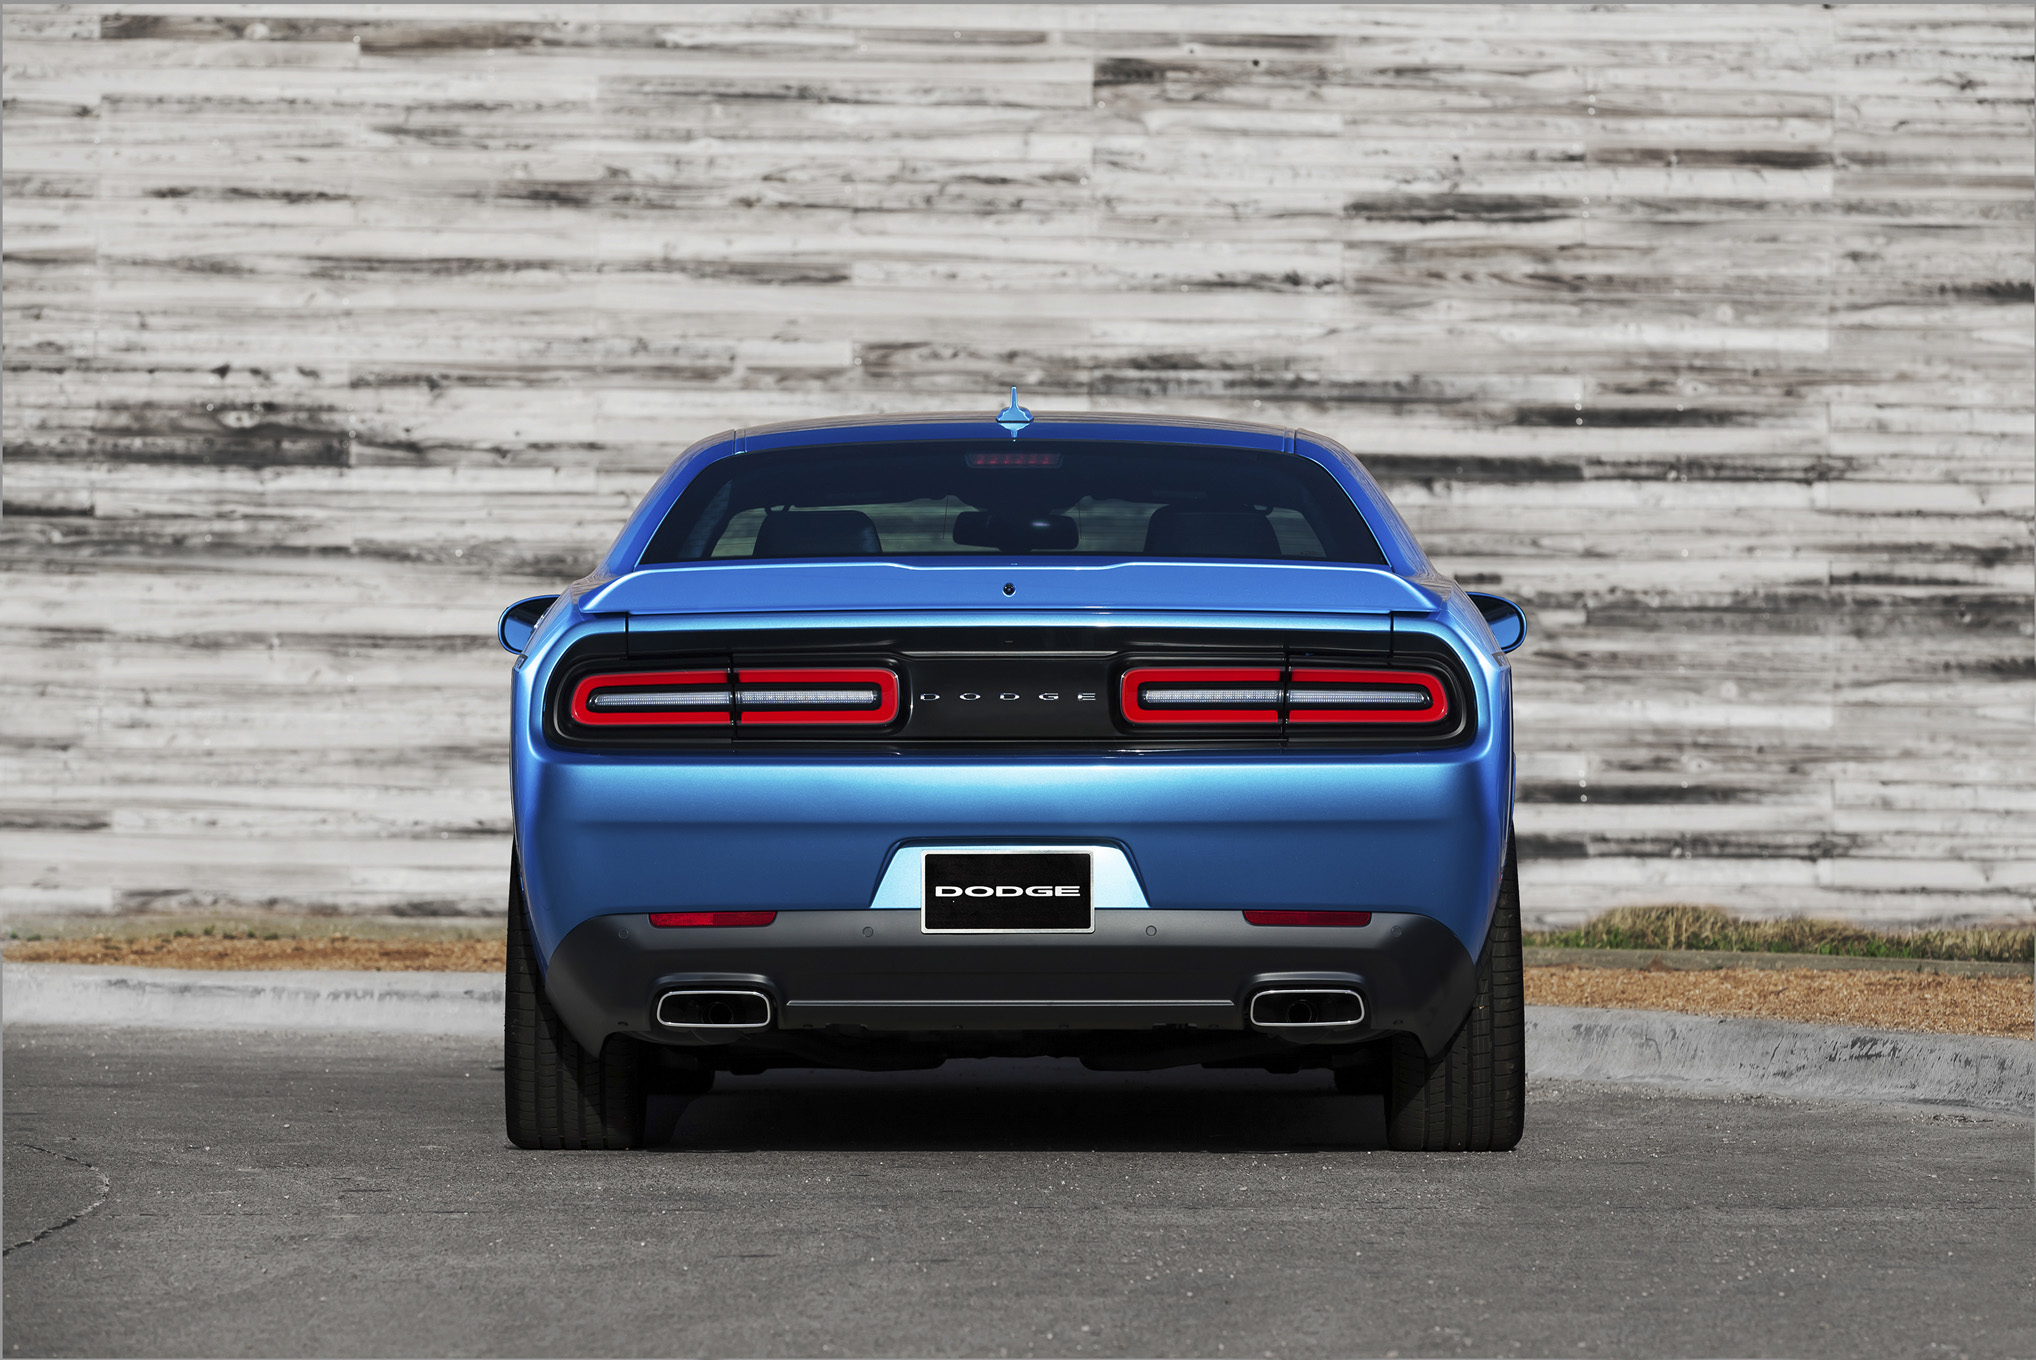 2015 Dodge Challenger HD wallpapers, Desktop wallpaper - most viewed